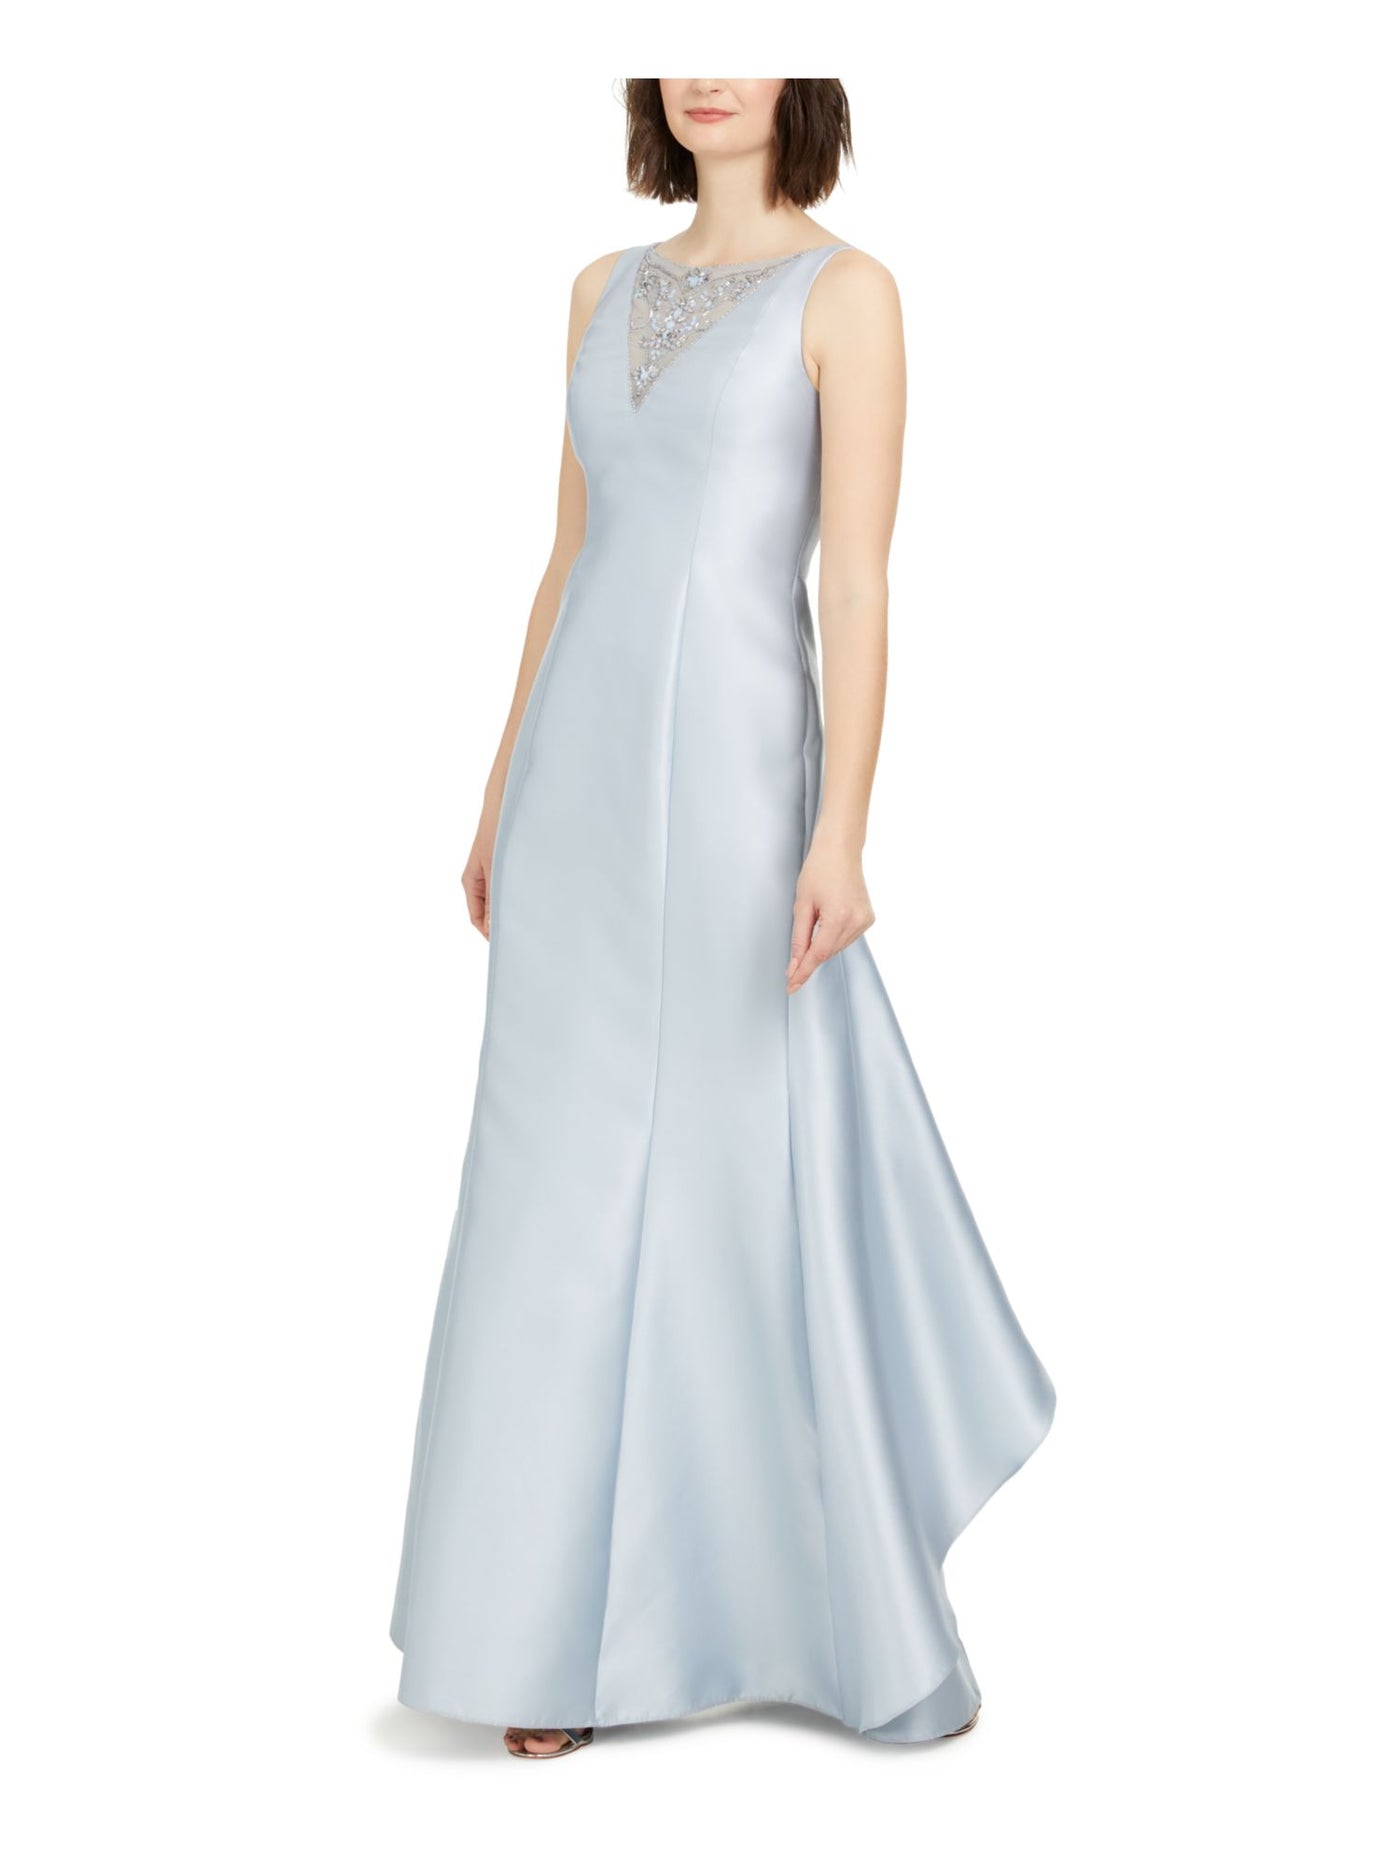 ADRIANNA PAPELL Womens Light Blue Embellished Ruffled Satin Sleeveless Illusion Neckline Full-Length Formal A-Line Dress 0